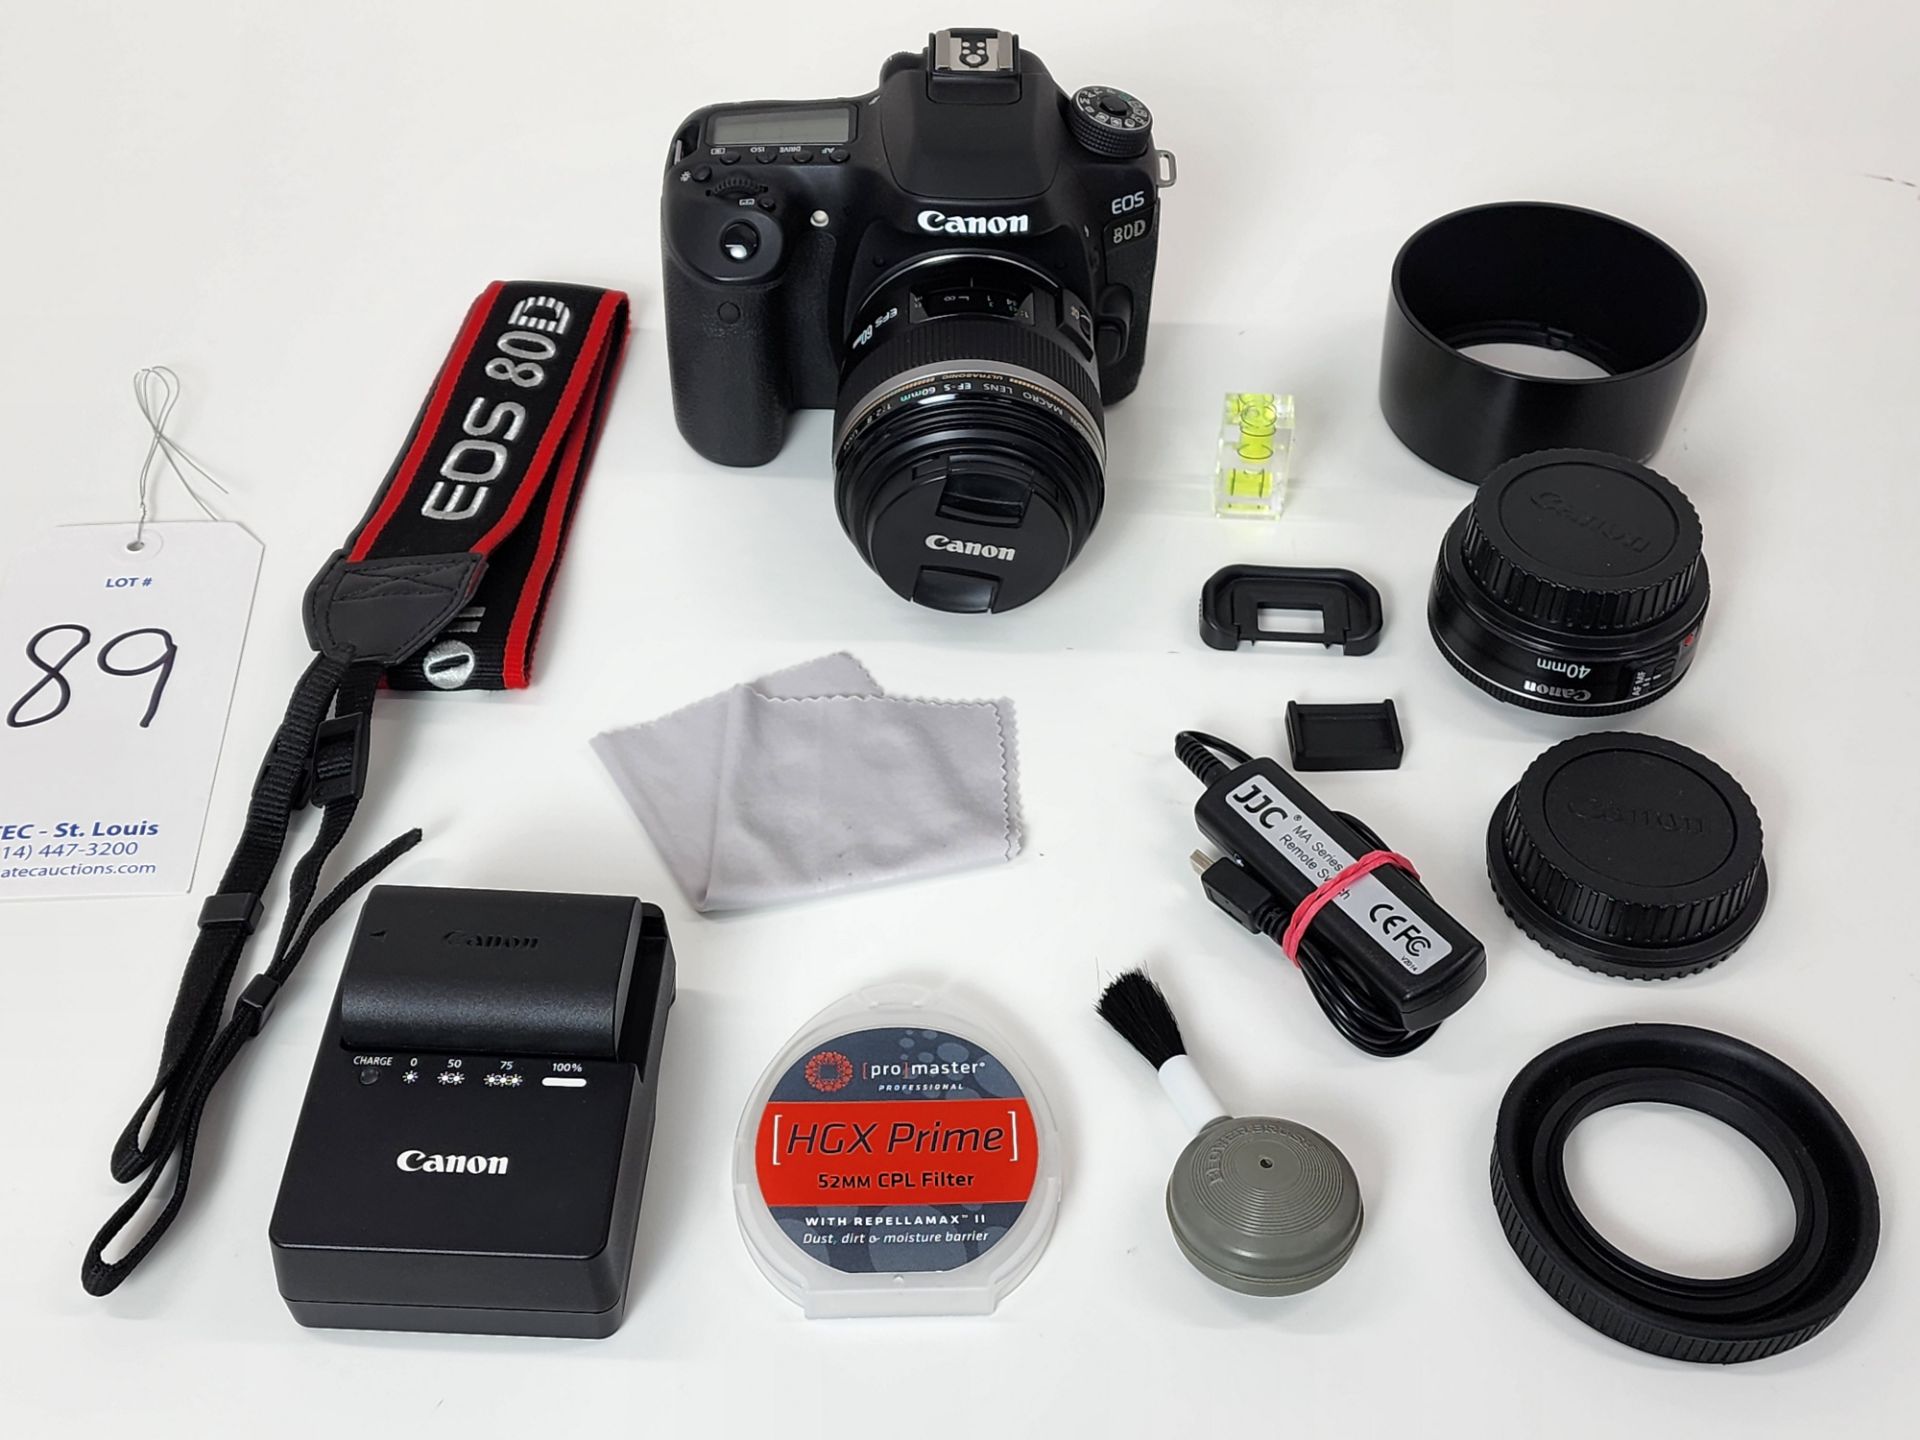 Canon Model EOS 80D (W) DSLR Camera Body, 24.2 Mega Pixel, Dual Pixel CMOS AF, Cross-Type Zmac 45-